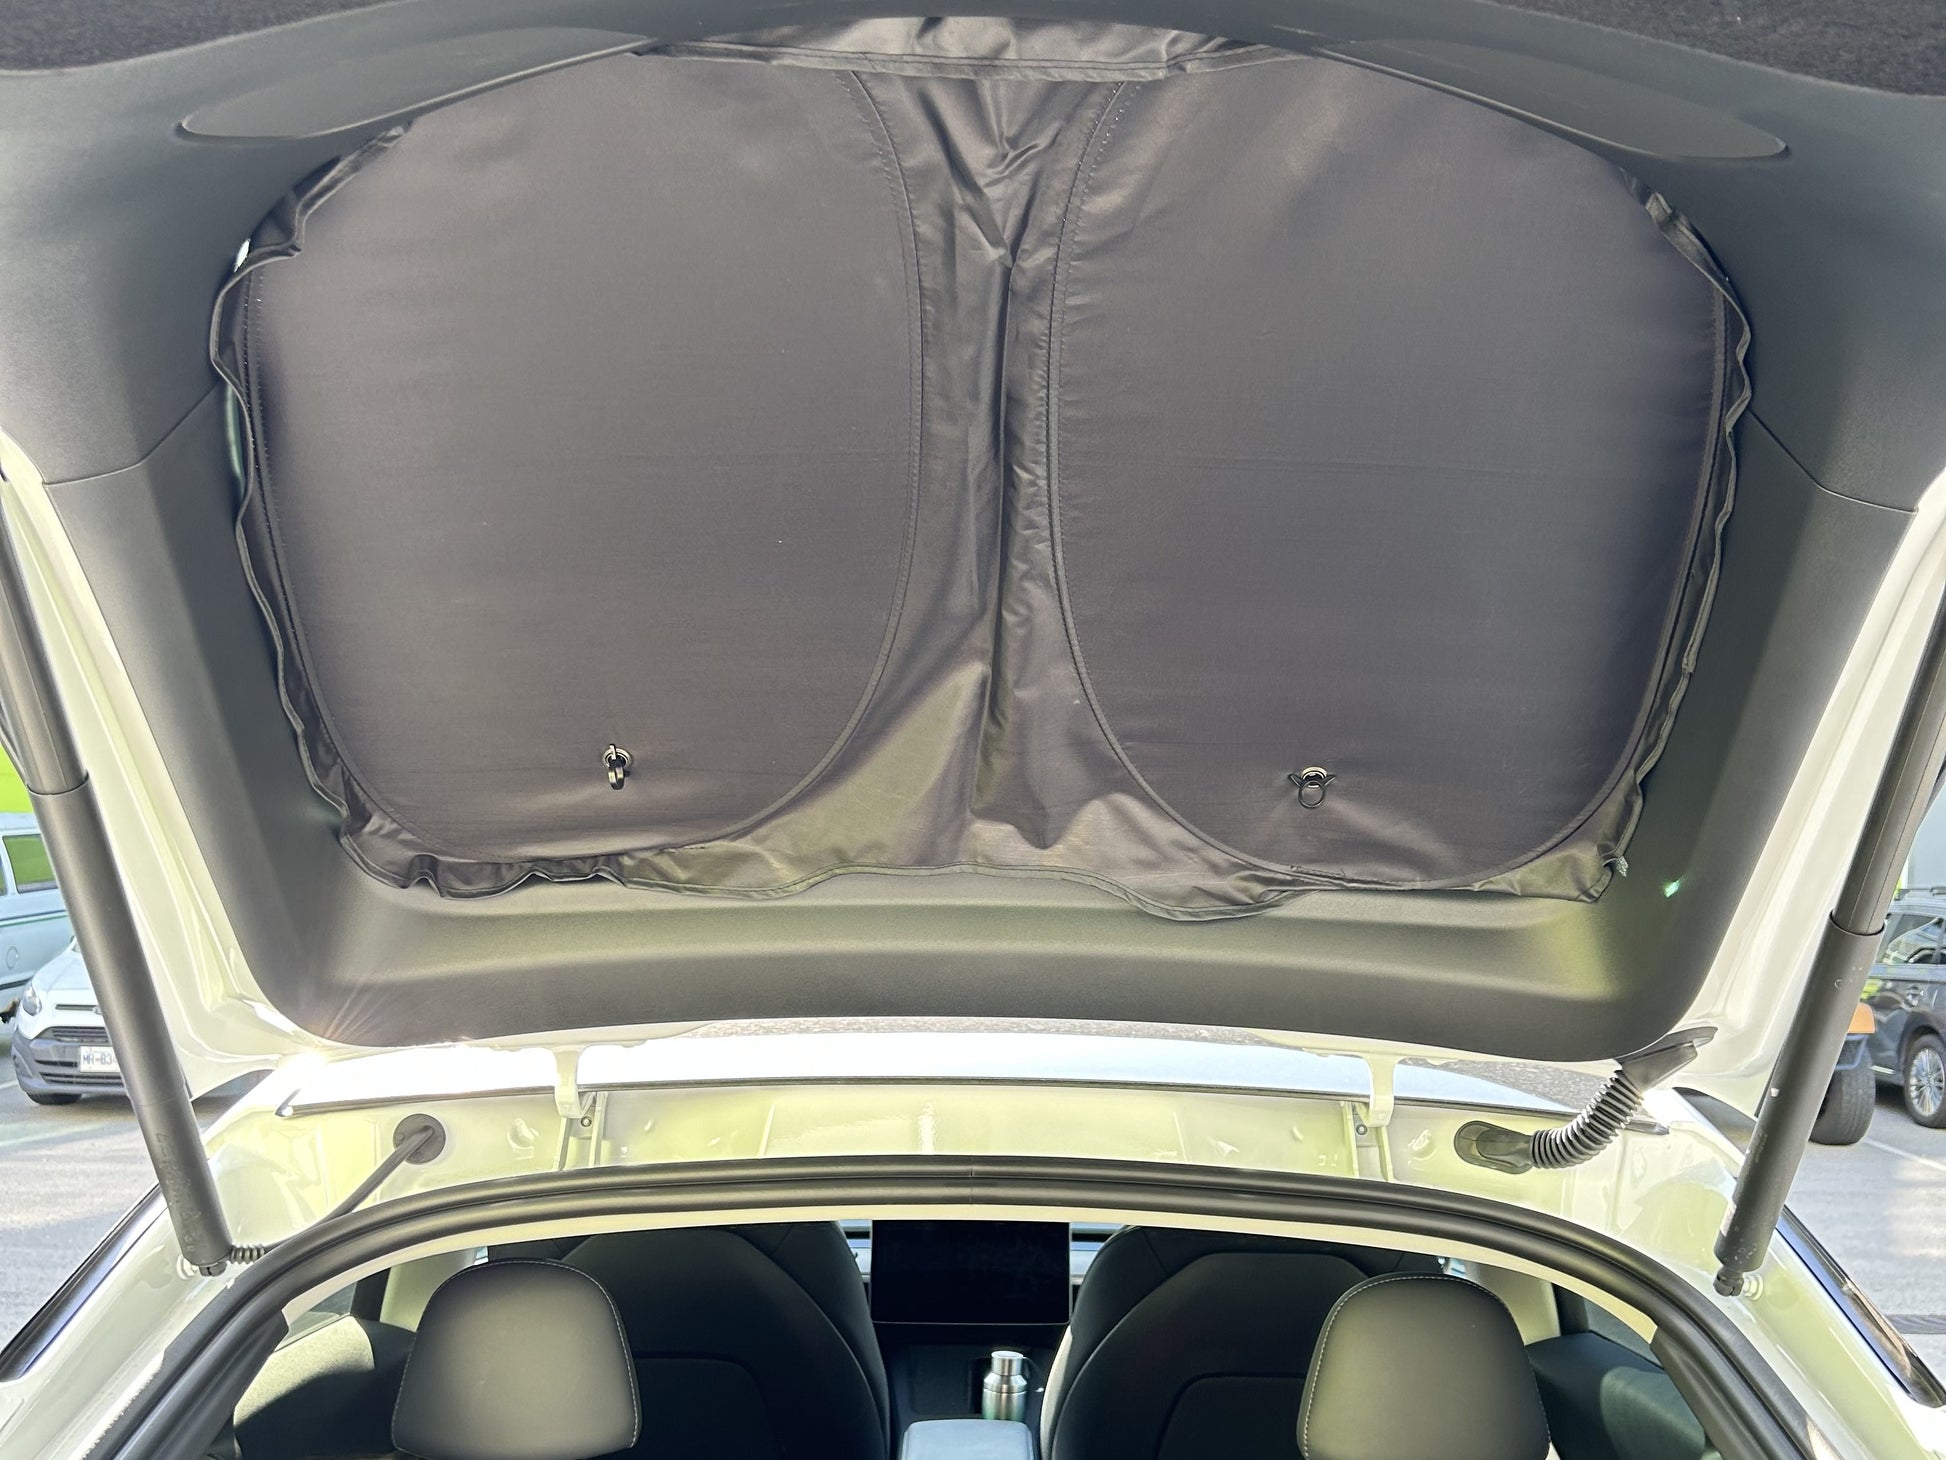 Privacy Shield for Tesla Model 3 - Windshield - One piece